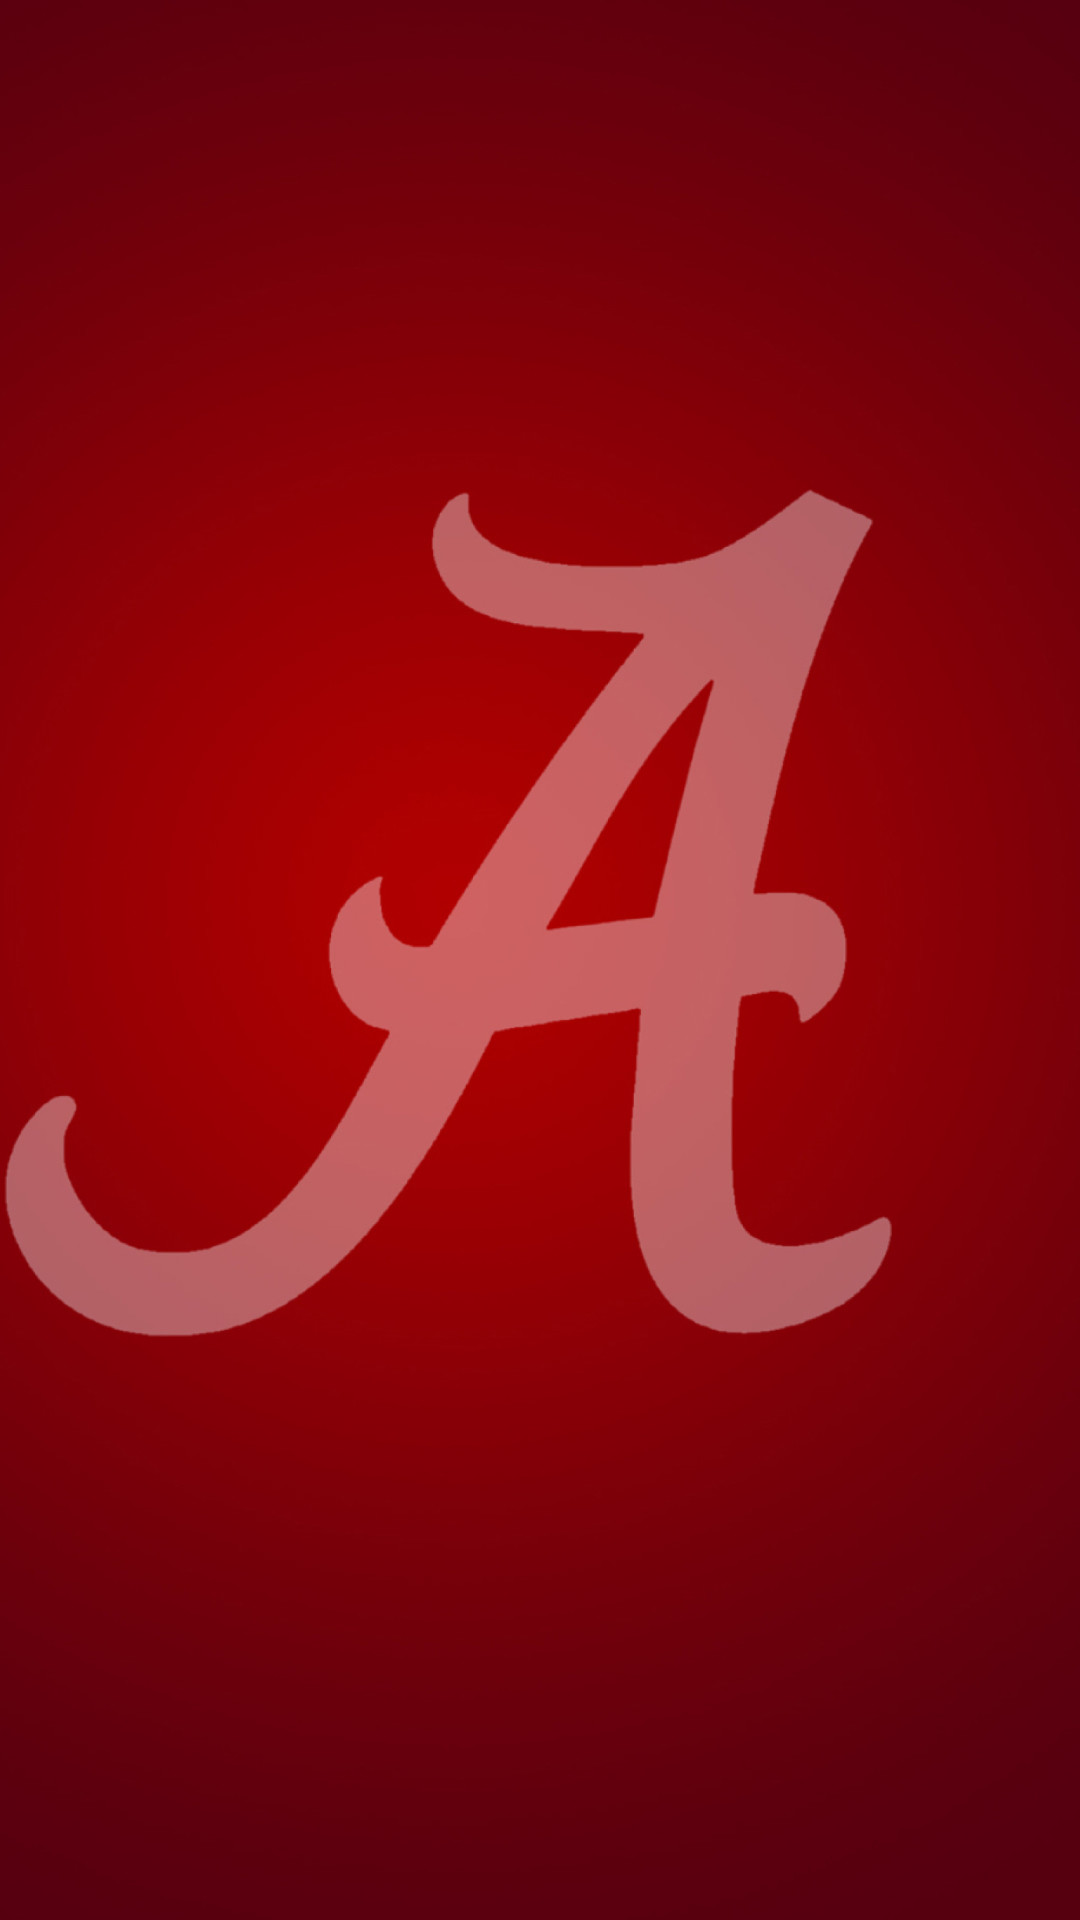 1080x1920 Alabama-Football-Wallpaper-HD-for-Android.jpg (1080Ã